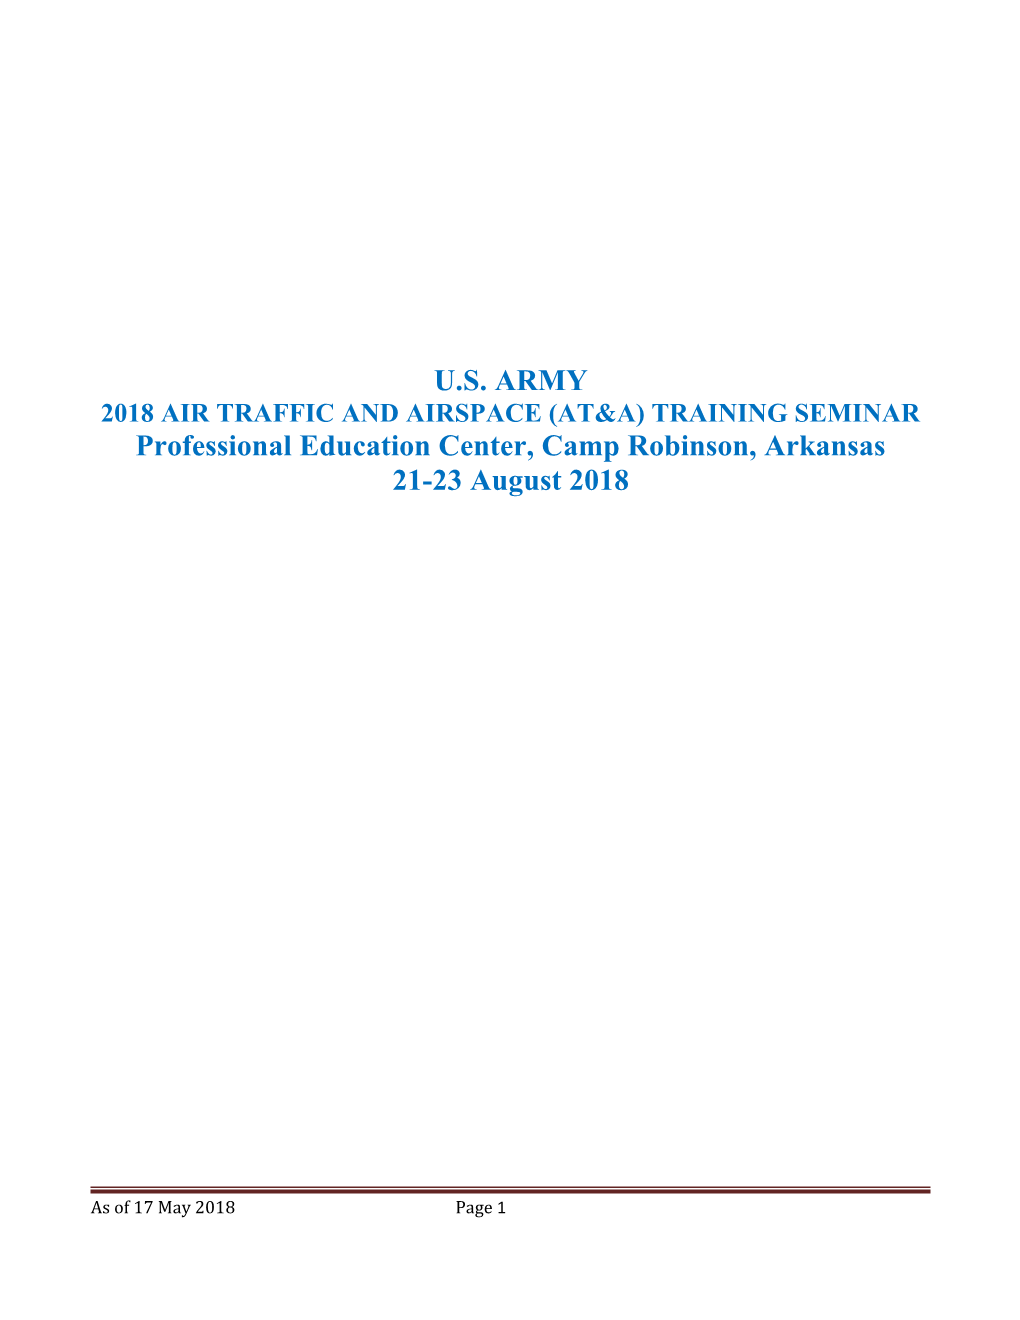 2018 Air Traffic and Airspace(At&A) Training Seminar